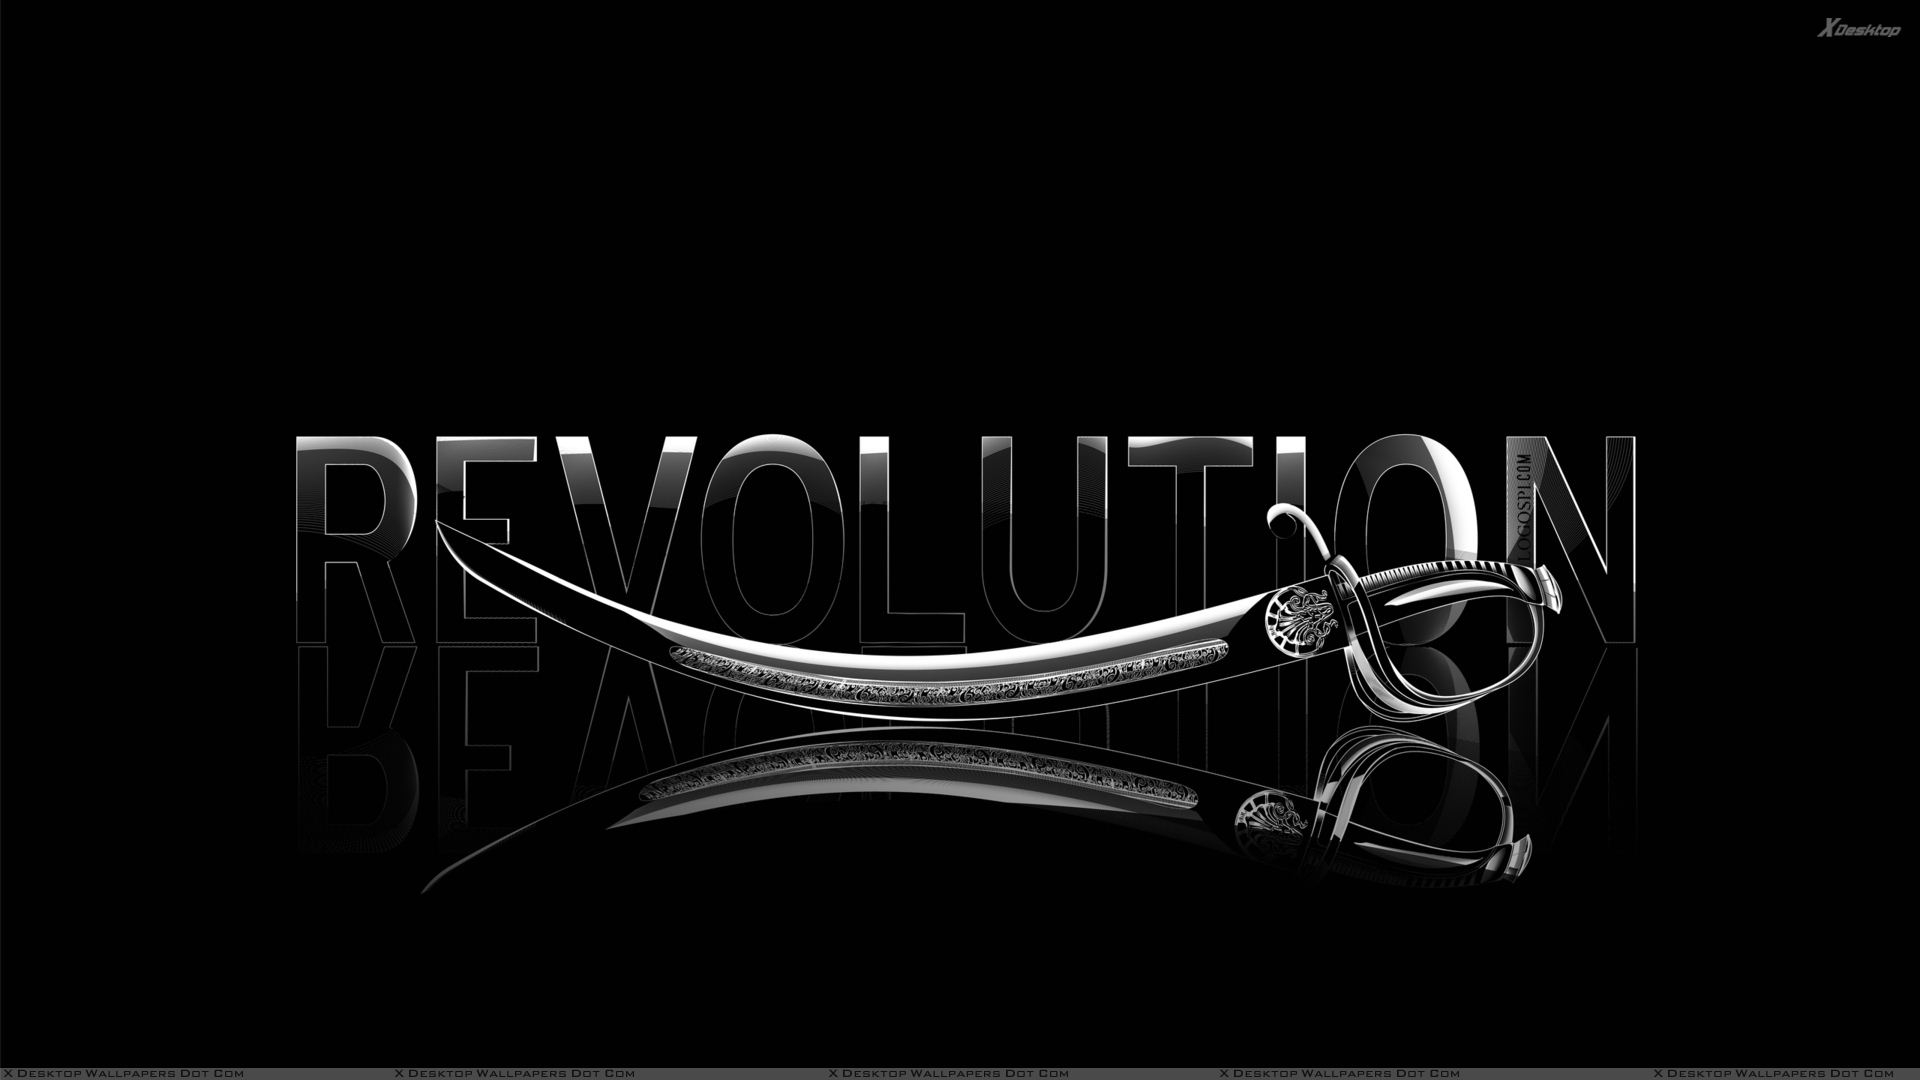 Revolution LoGo With Sword On Black Background Wallpaper